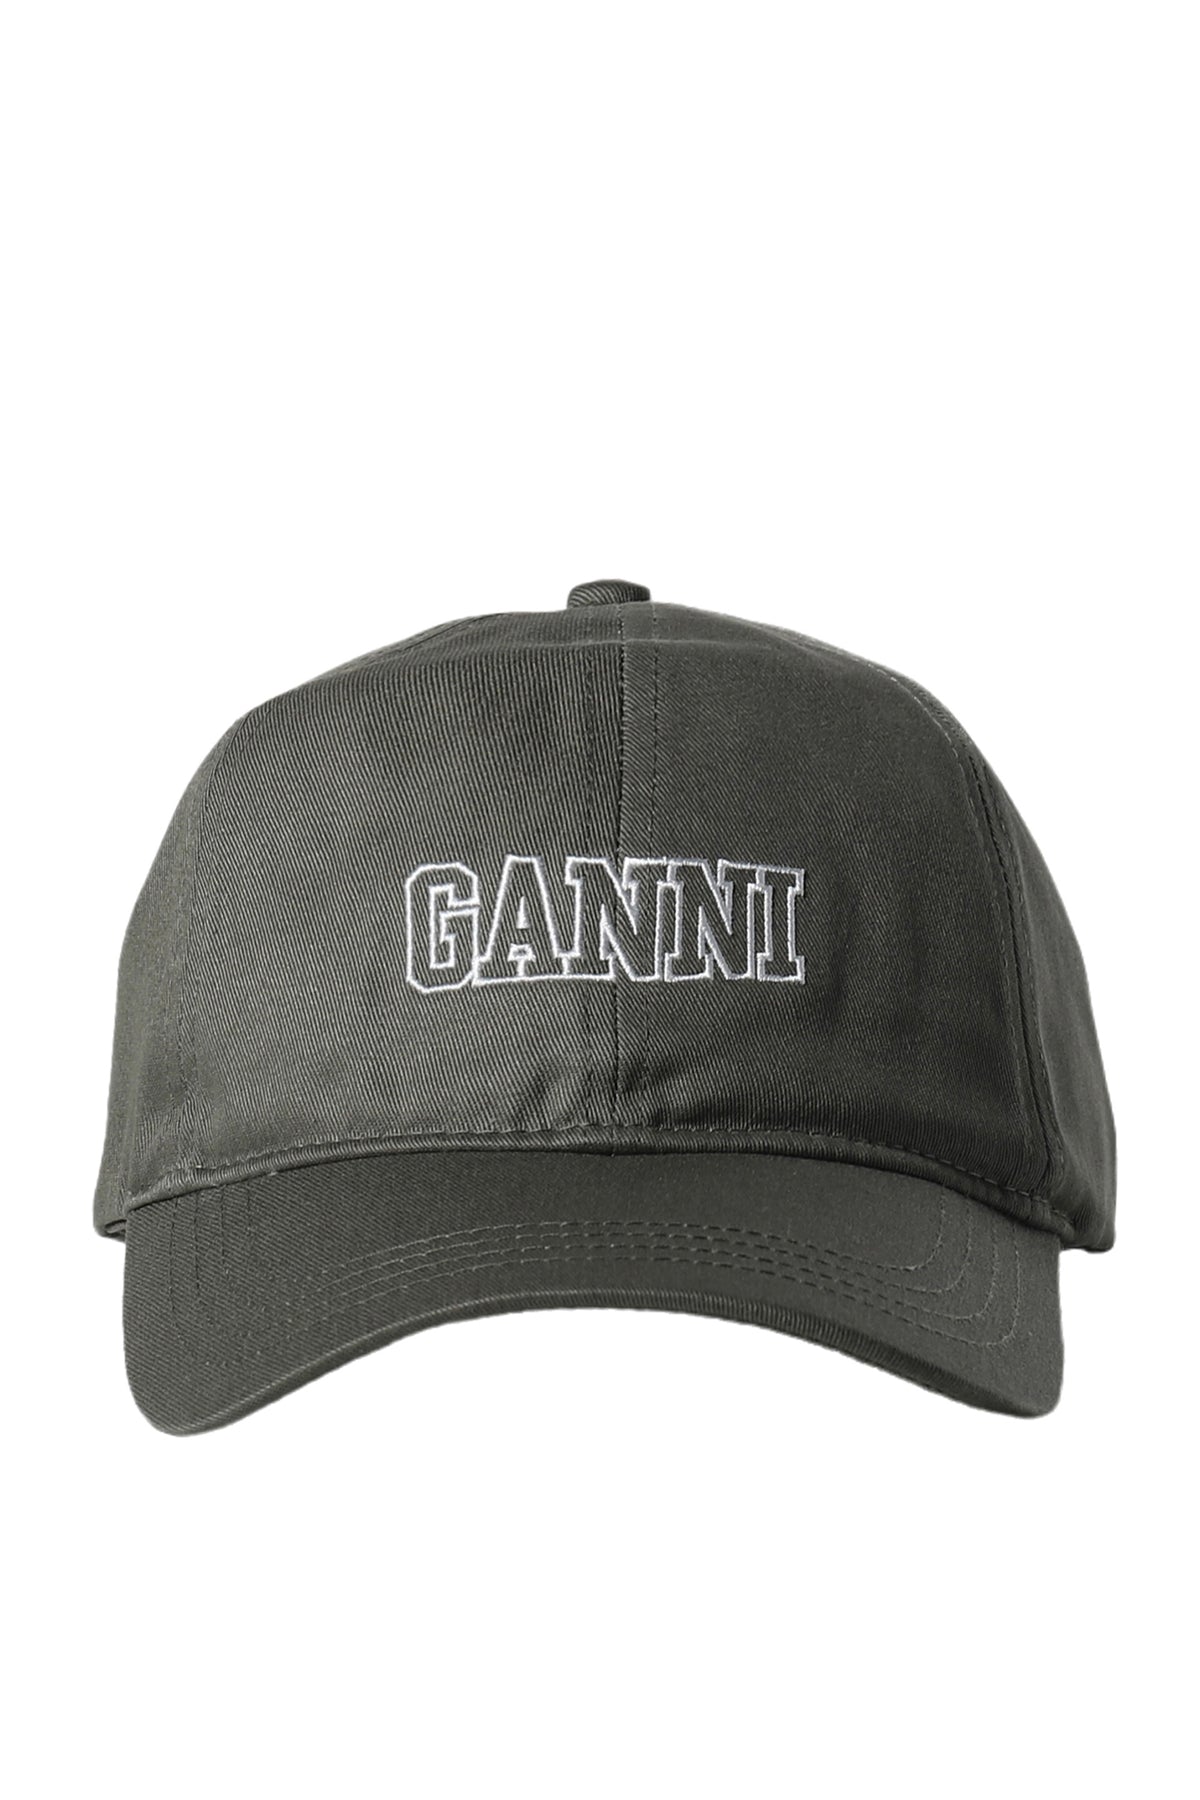 CAP HAT / GRN